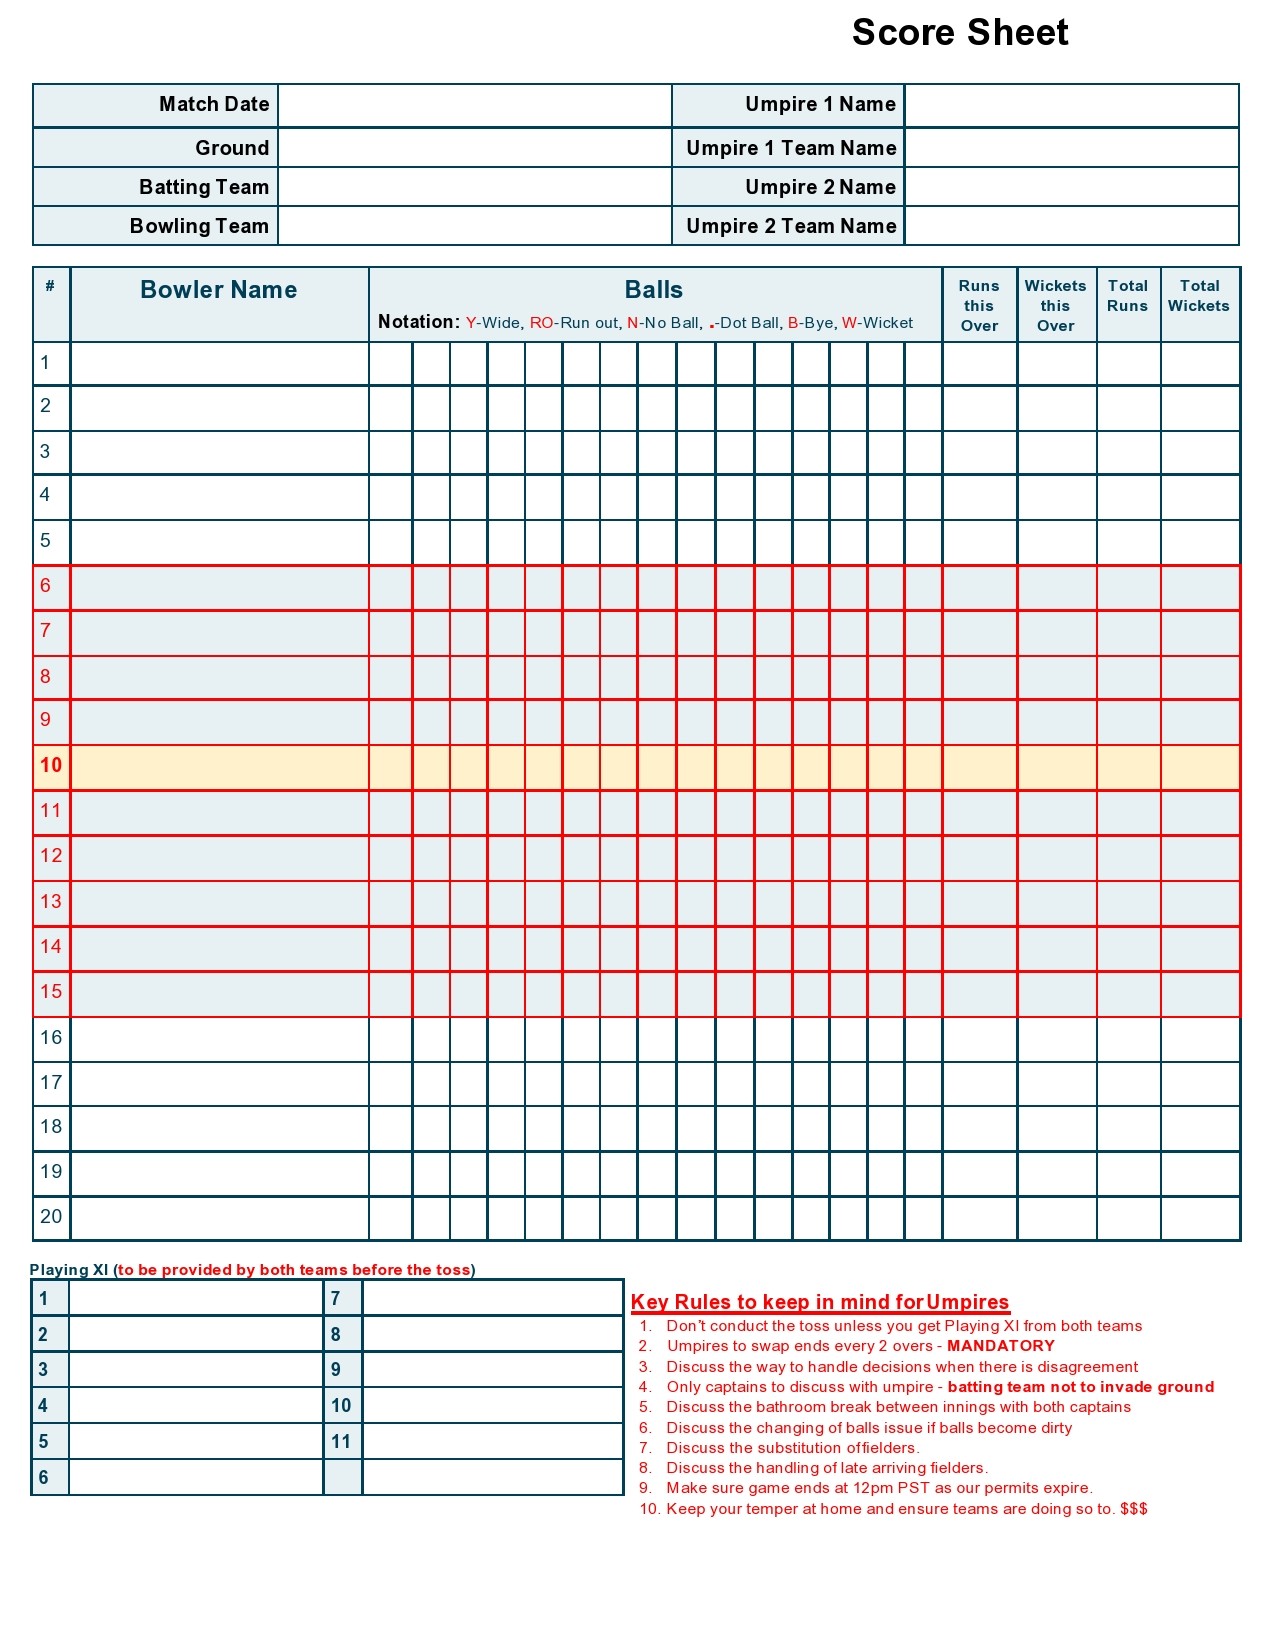 36 Printable Bowling Score Sheet Templates [& Examples]